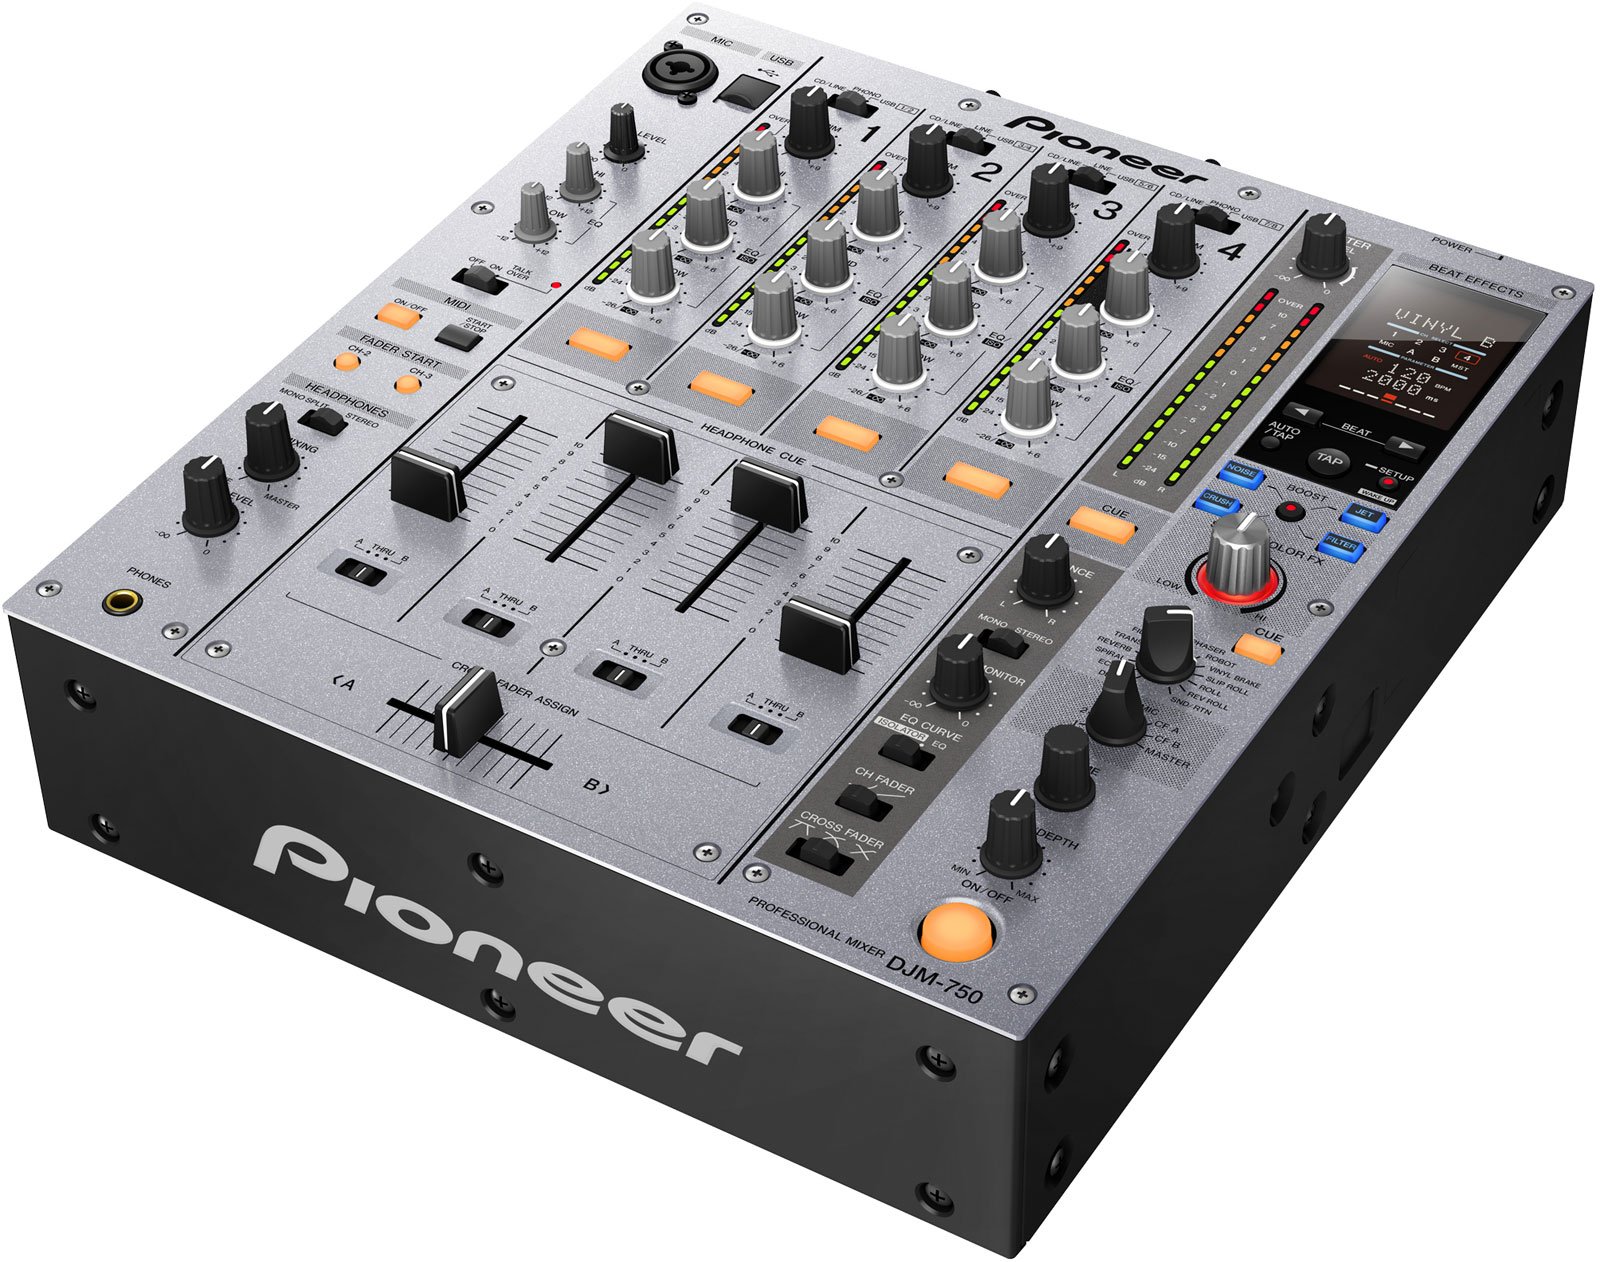  Pioneer DJM-750 S